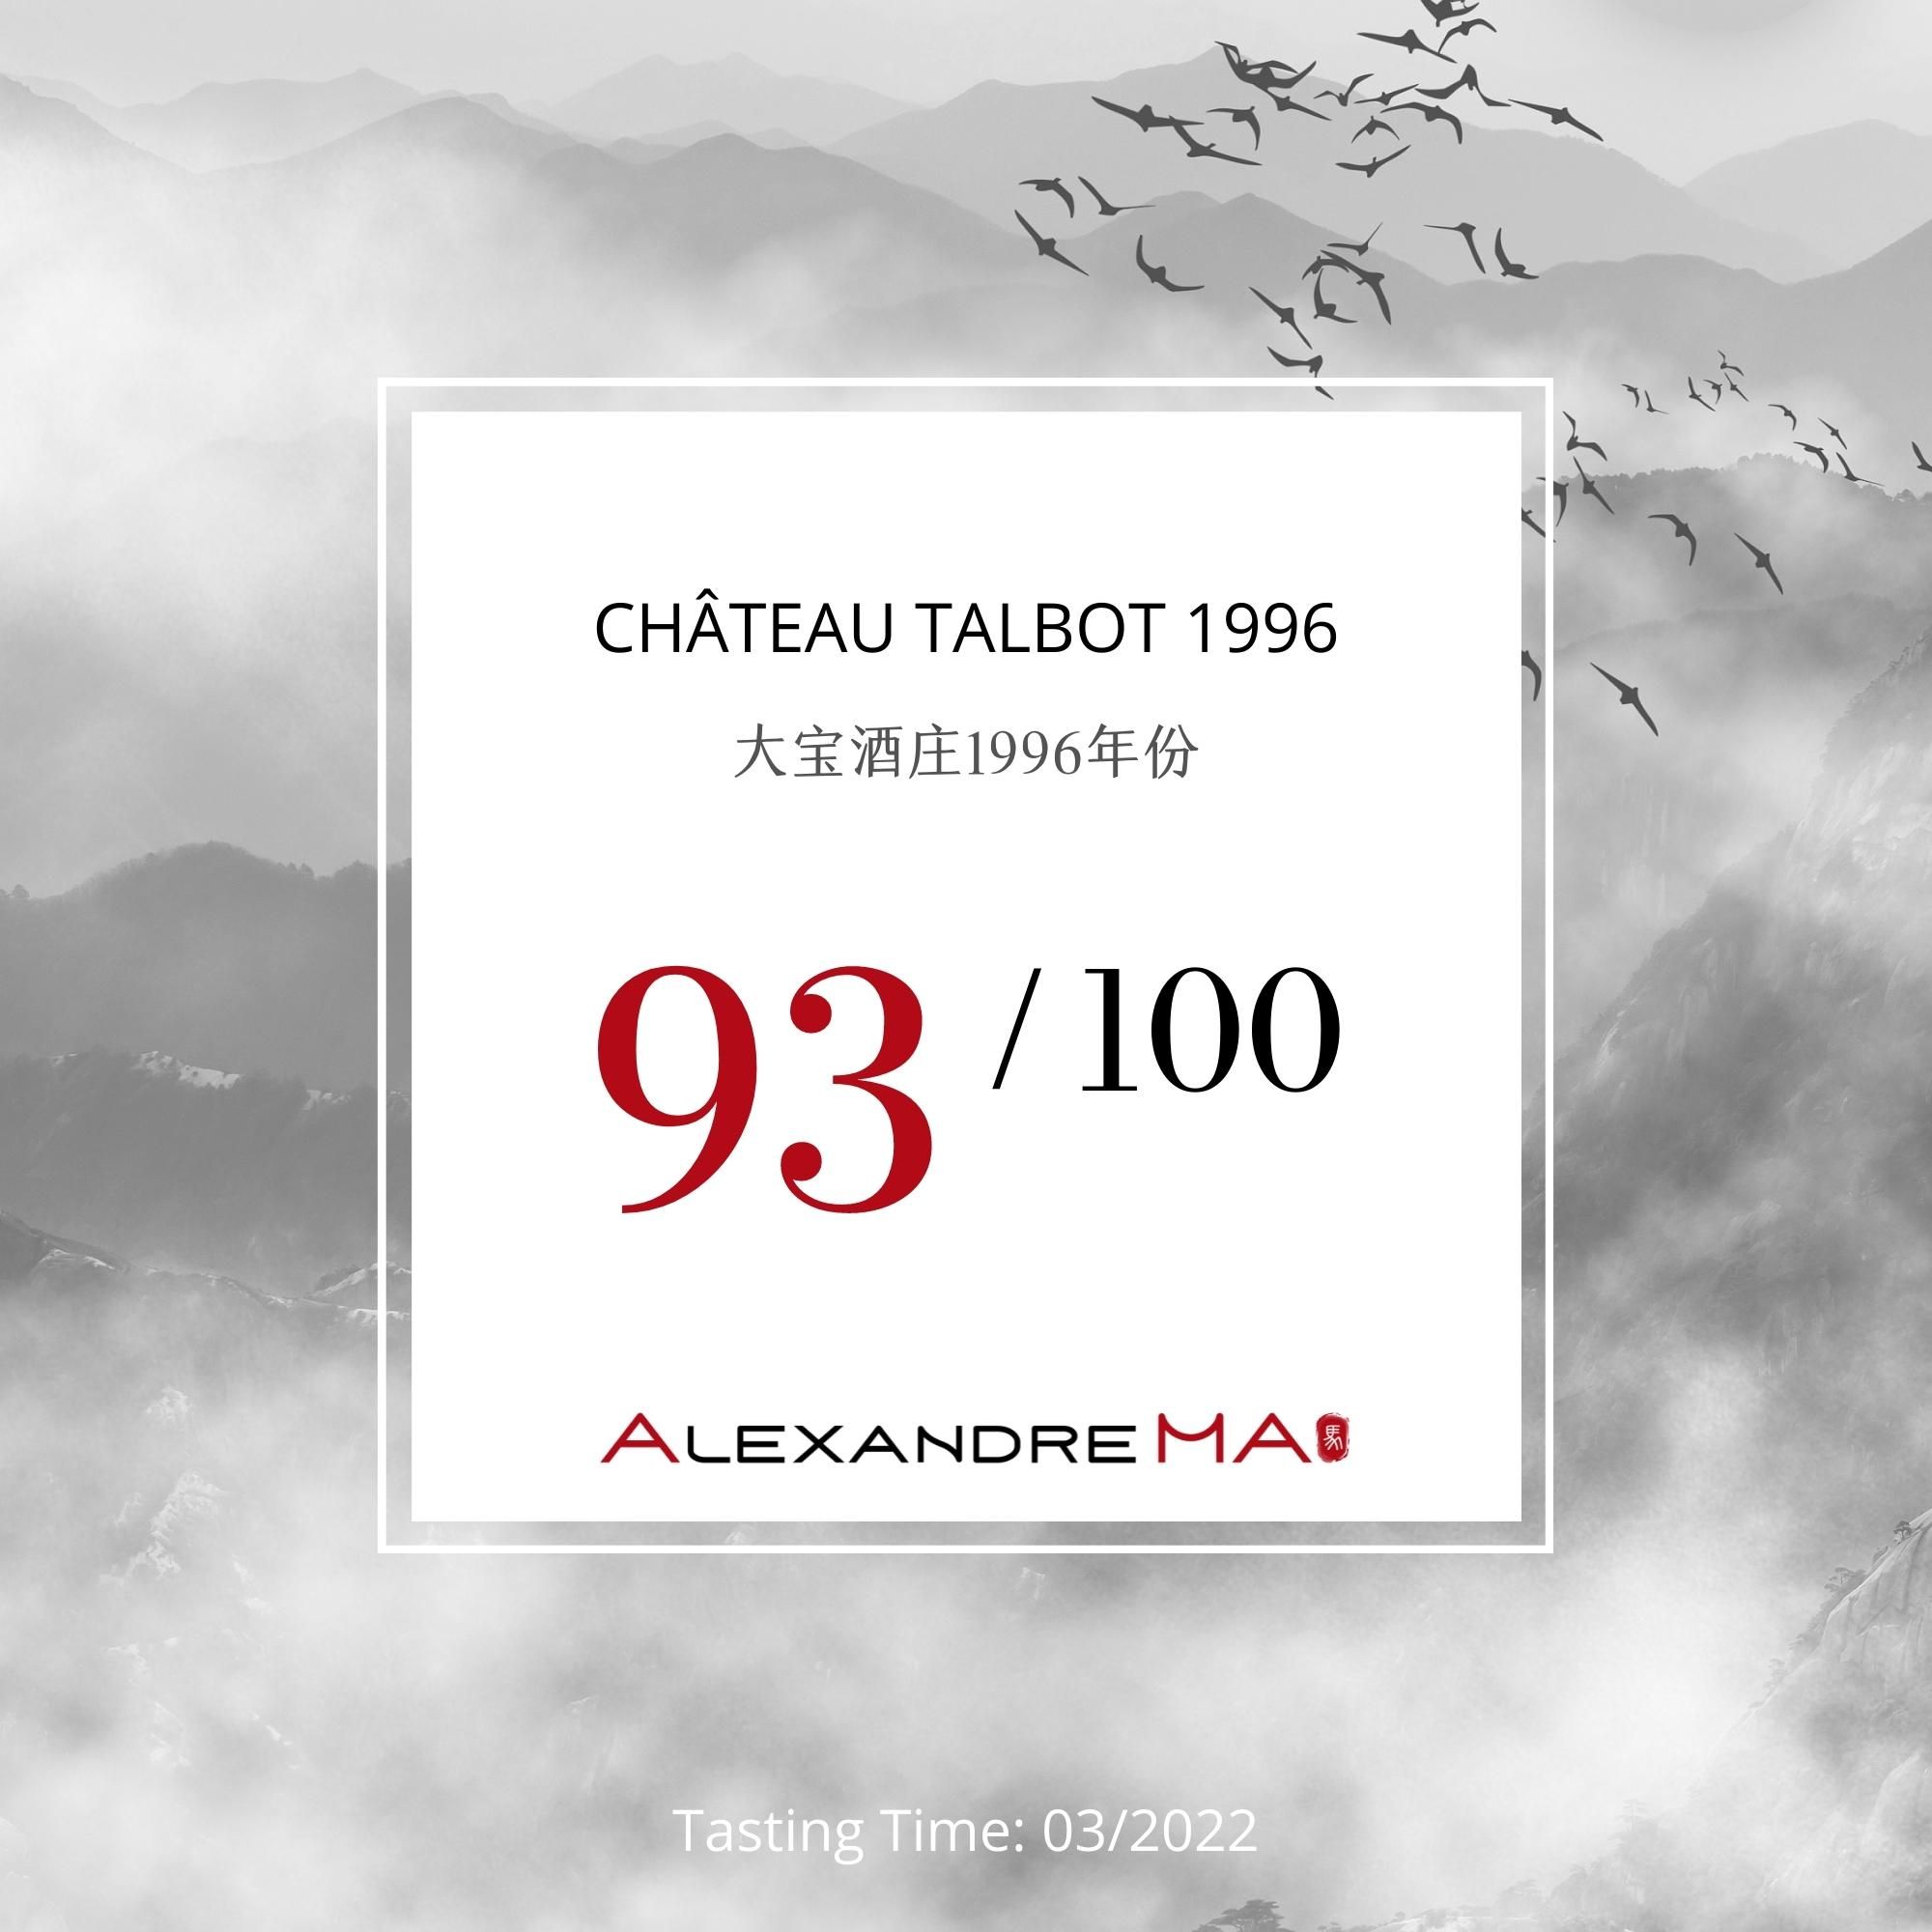 Château Talbot 大宝酒庄 1996 - Alexandre Ma